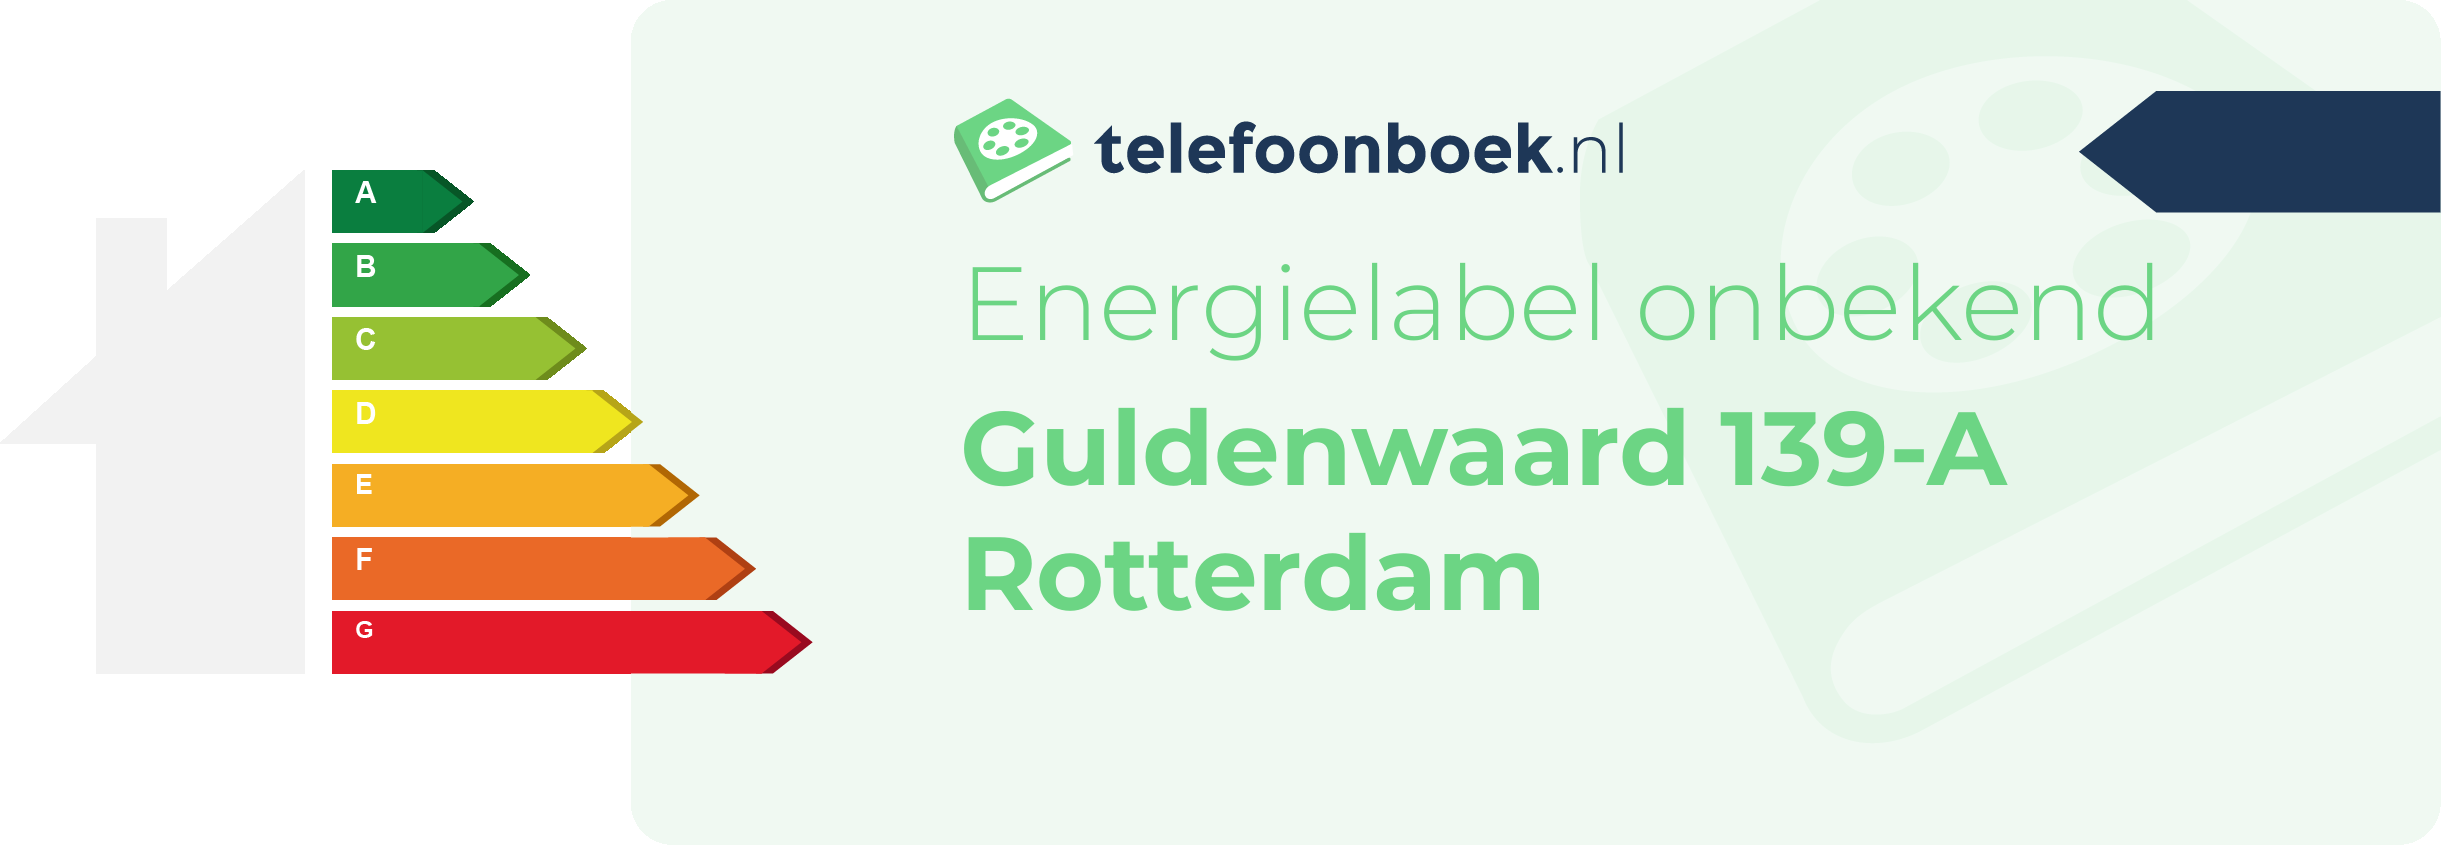 Energielabel Guldenwaard 139-A Rotterdam